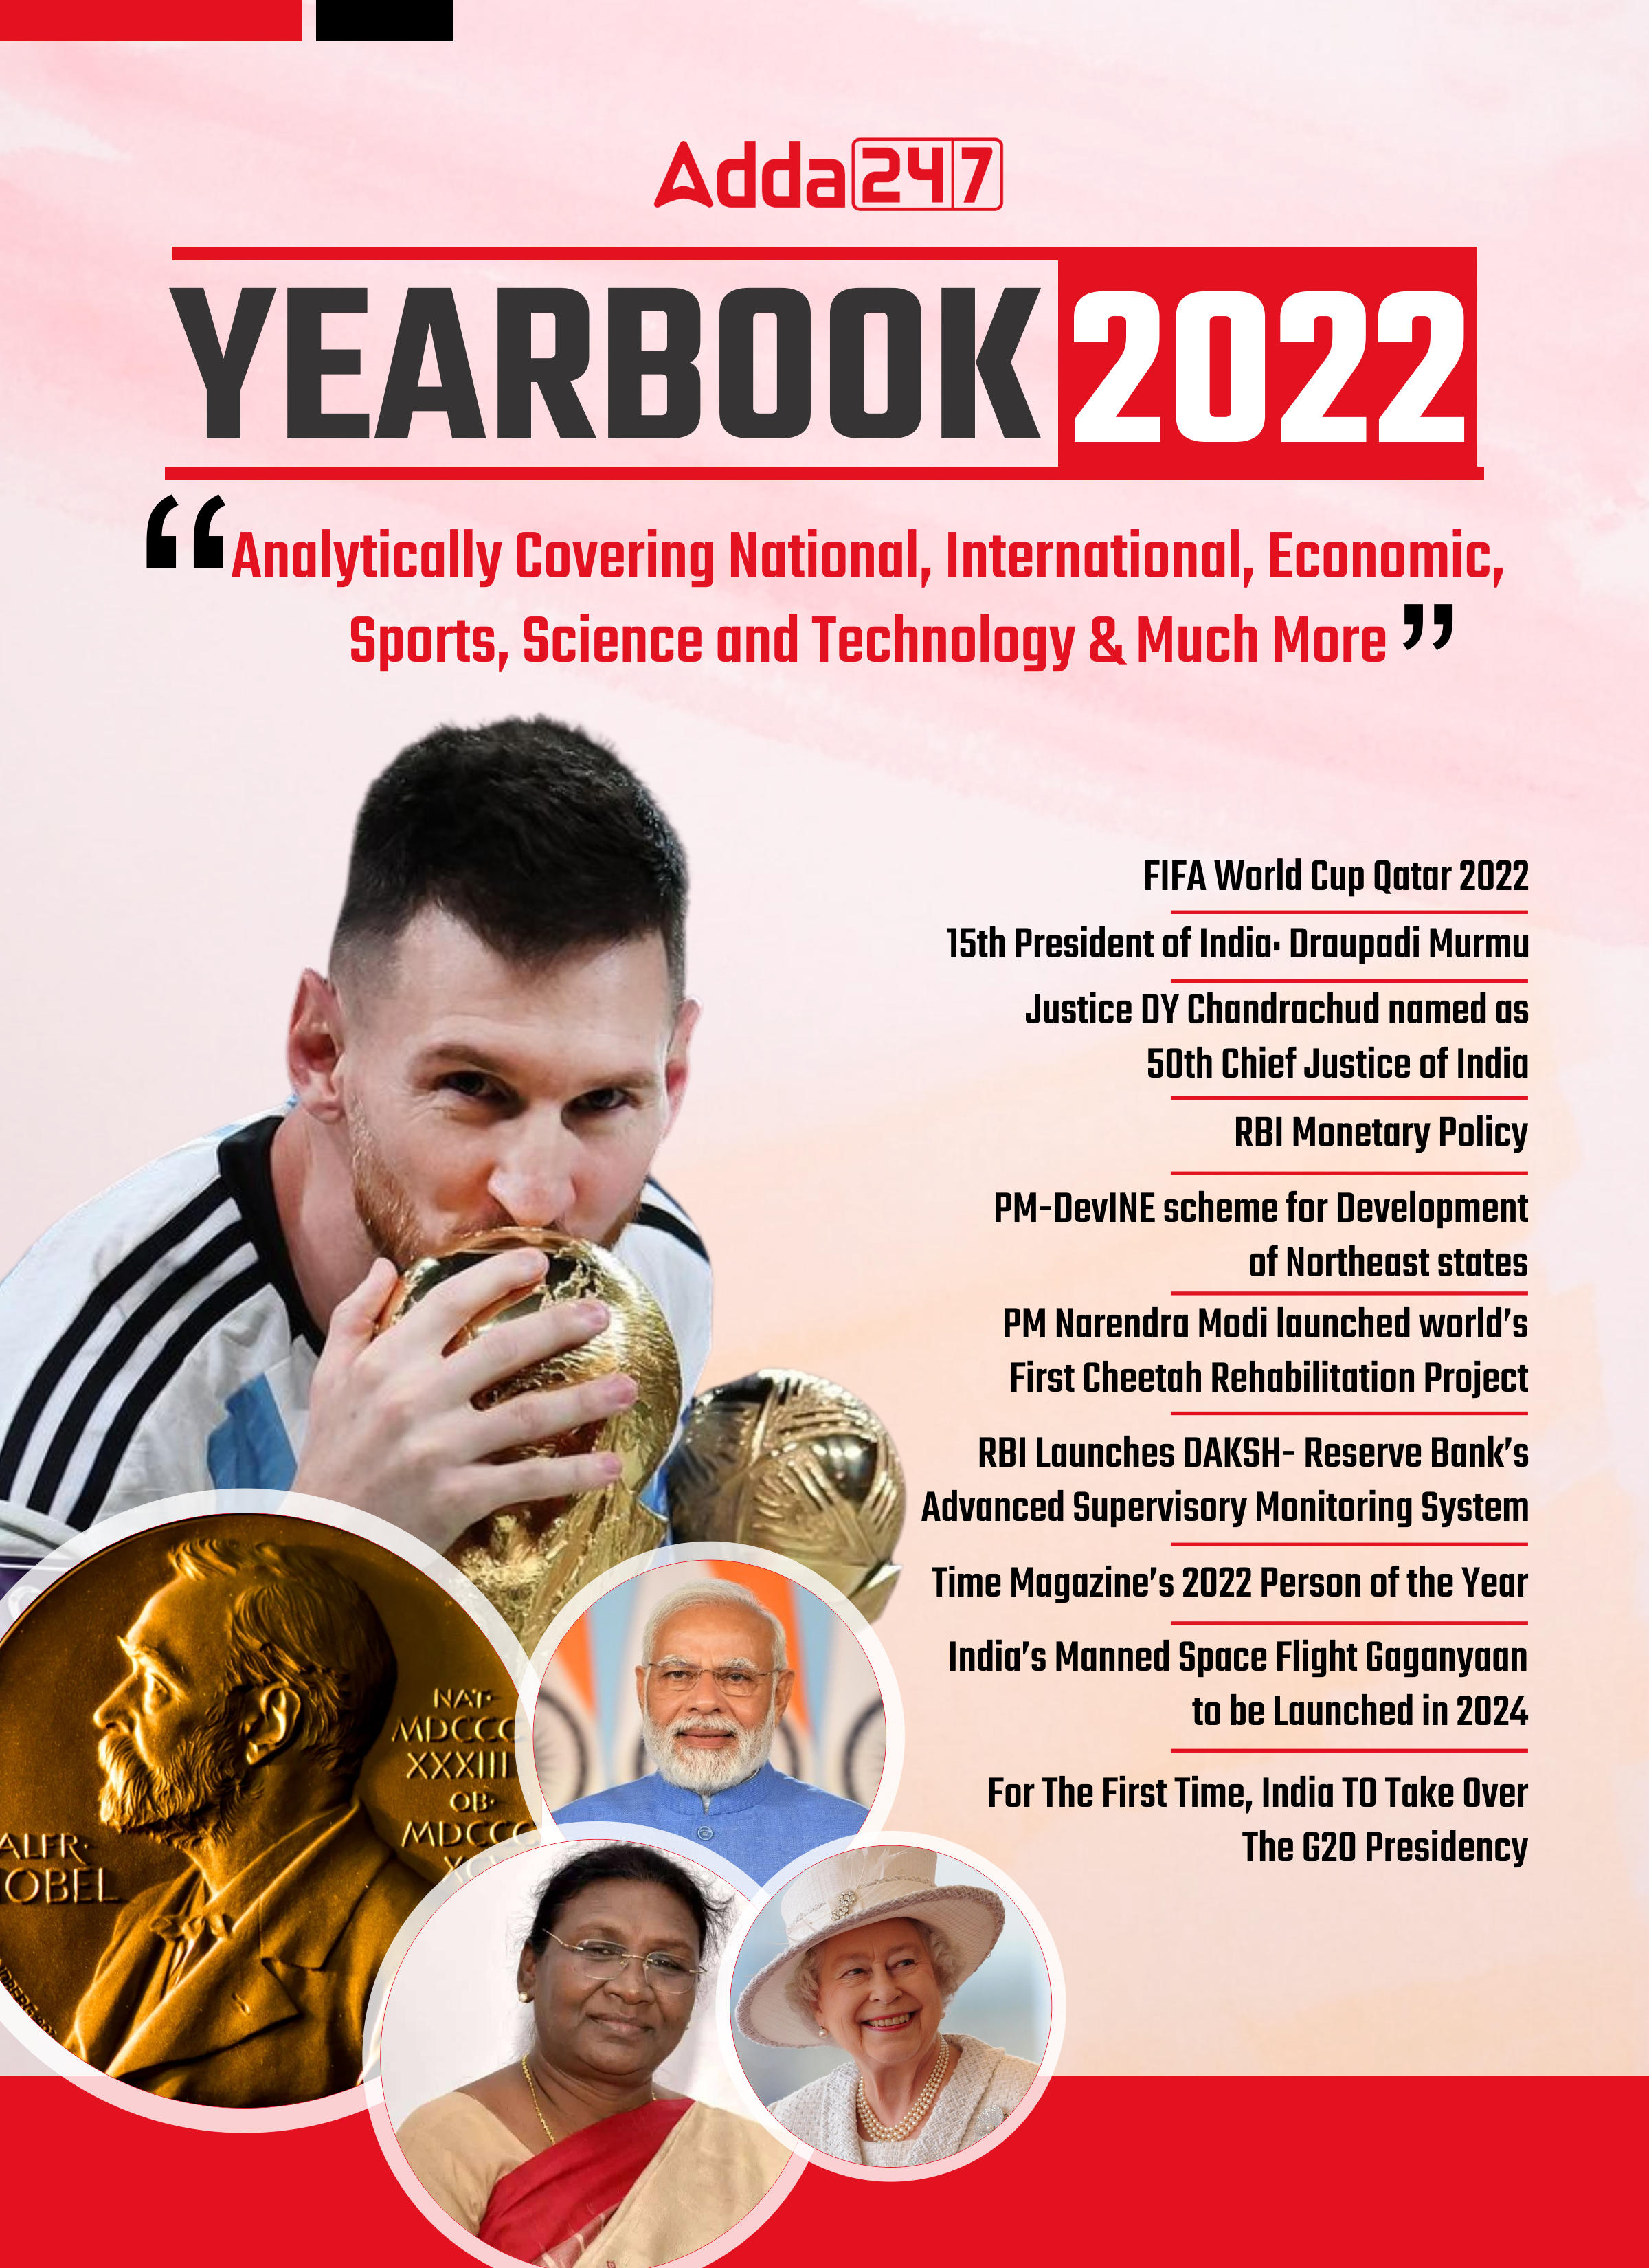 Adda247 Yearbook 2022 PDF Download_40.1